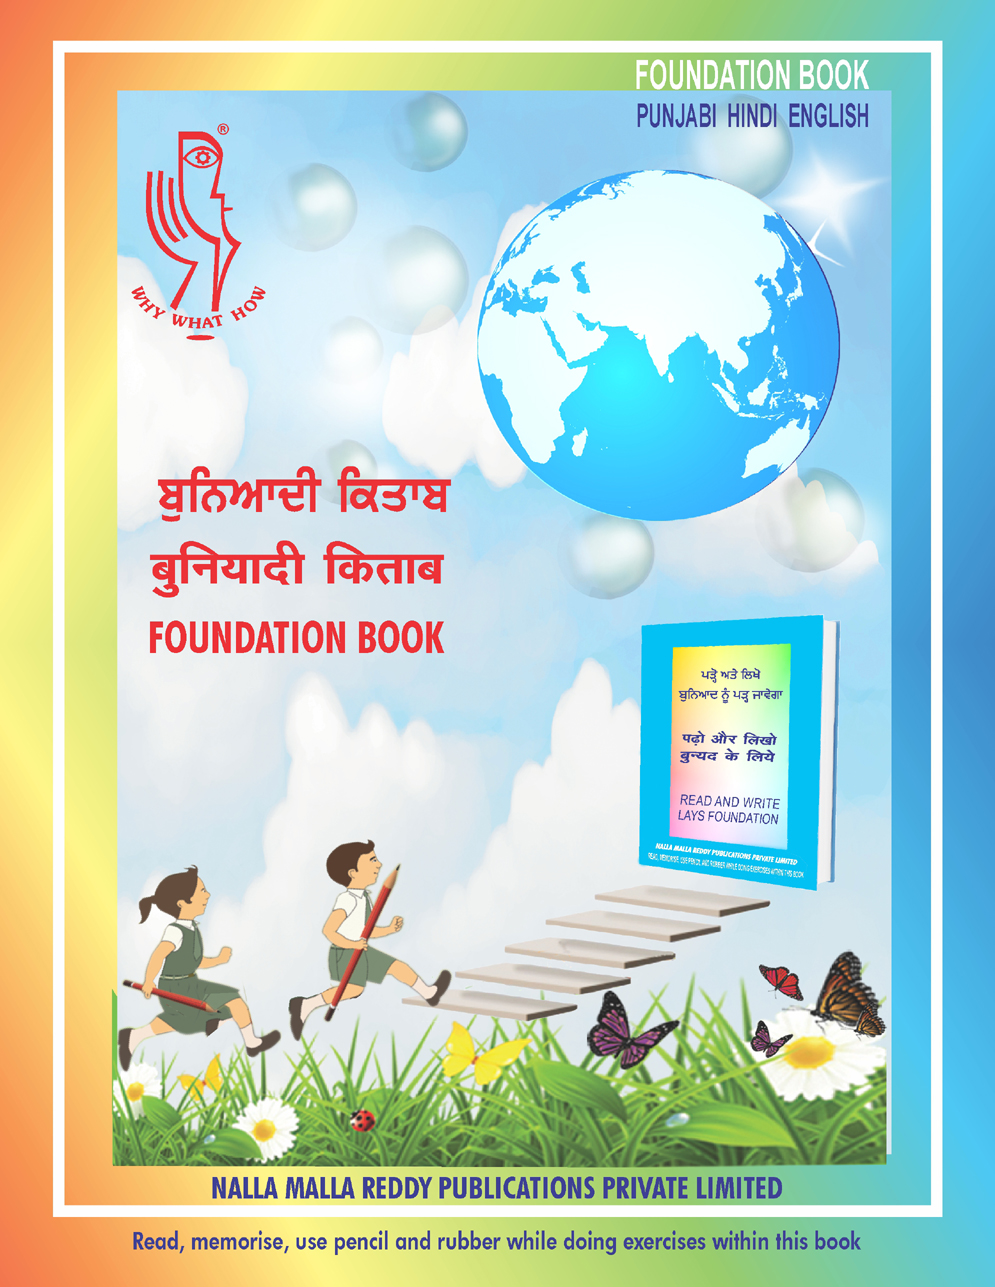 Punjabi Hindi English Foundation Book Tittle website